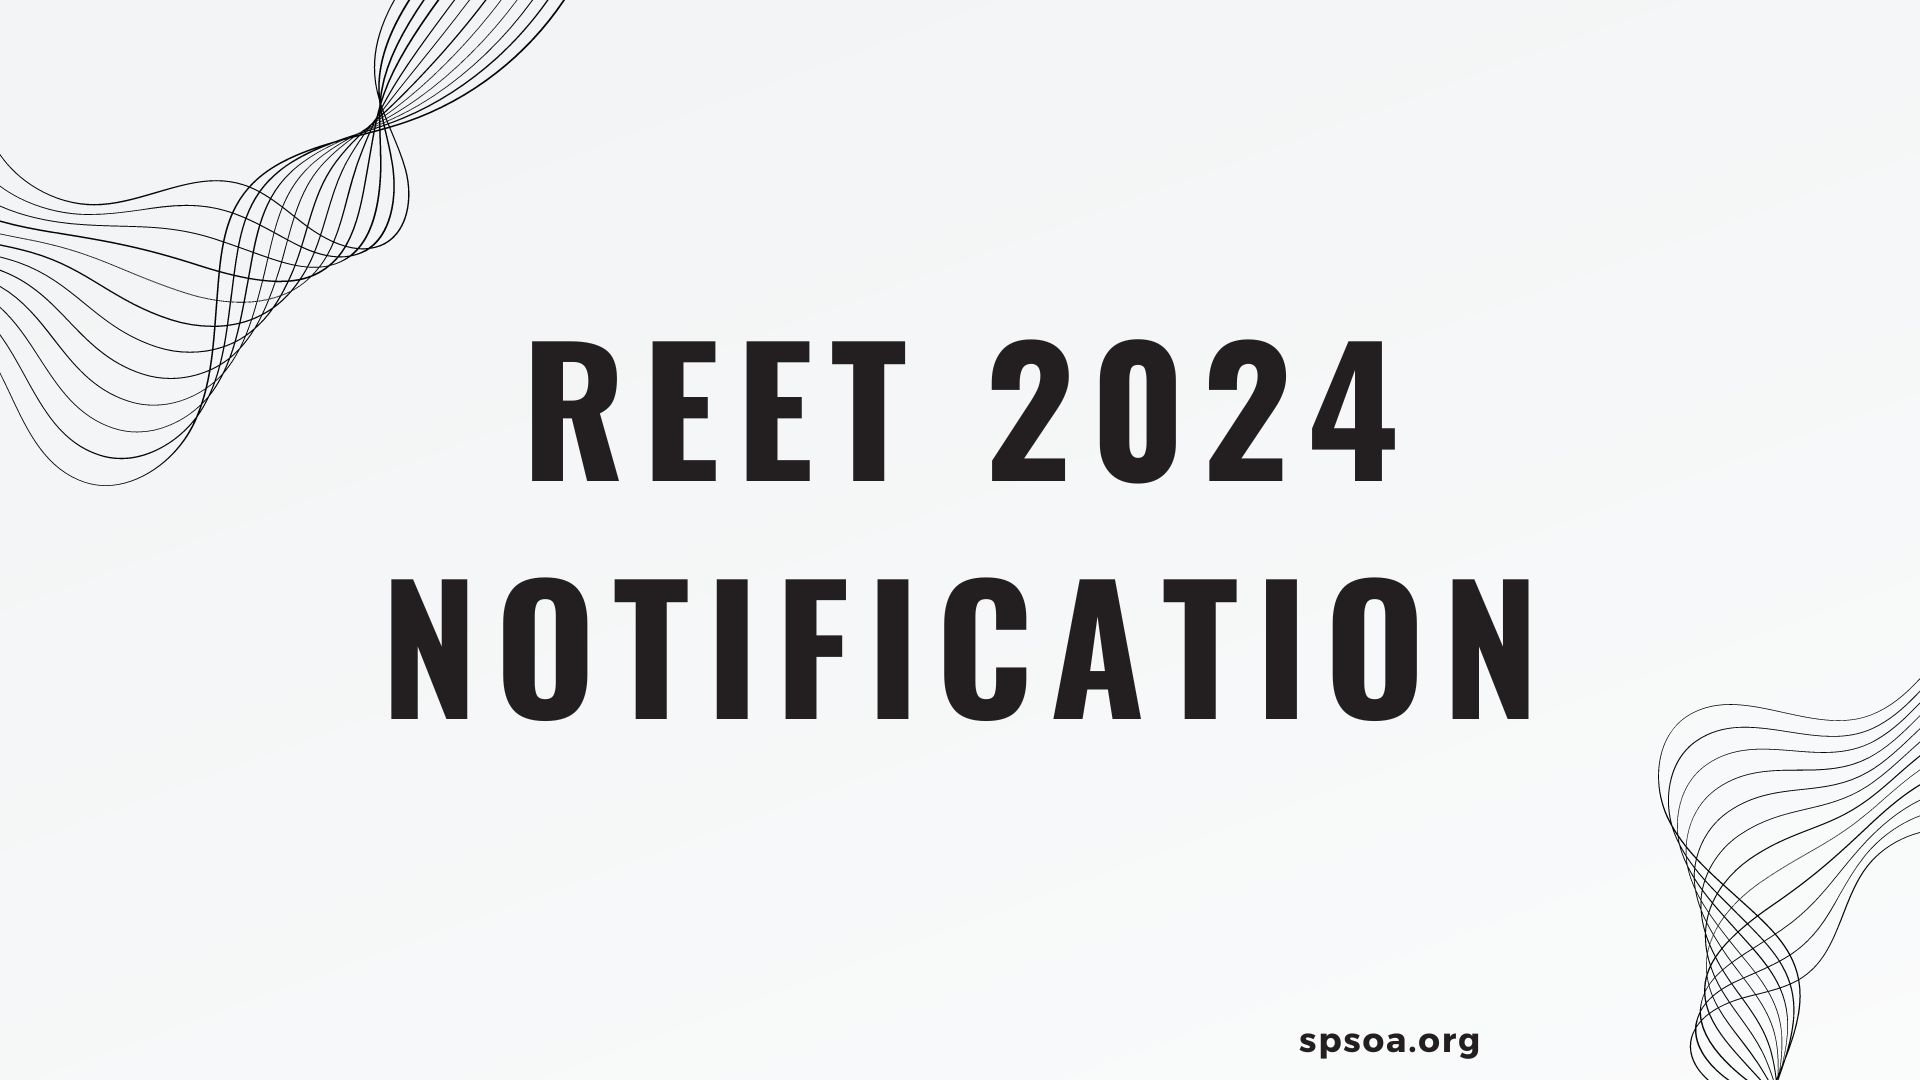 REET 2024 Notification